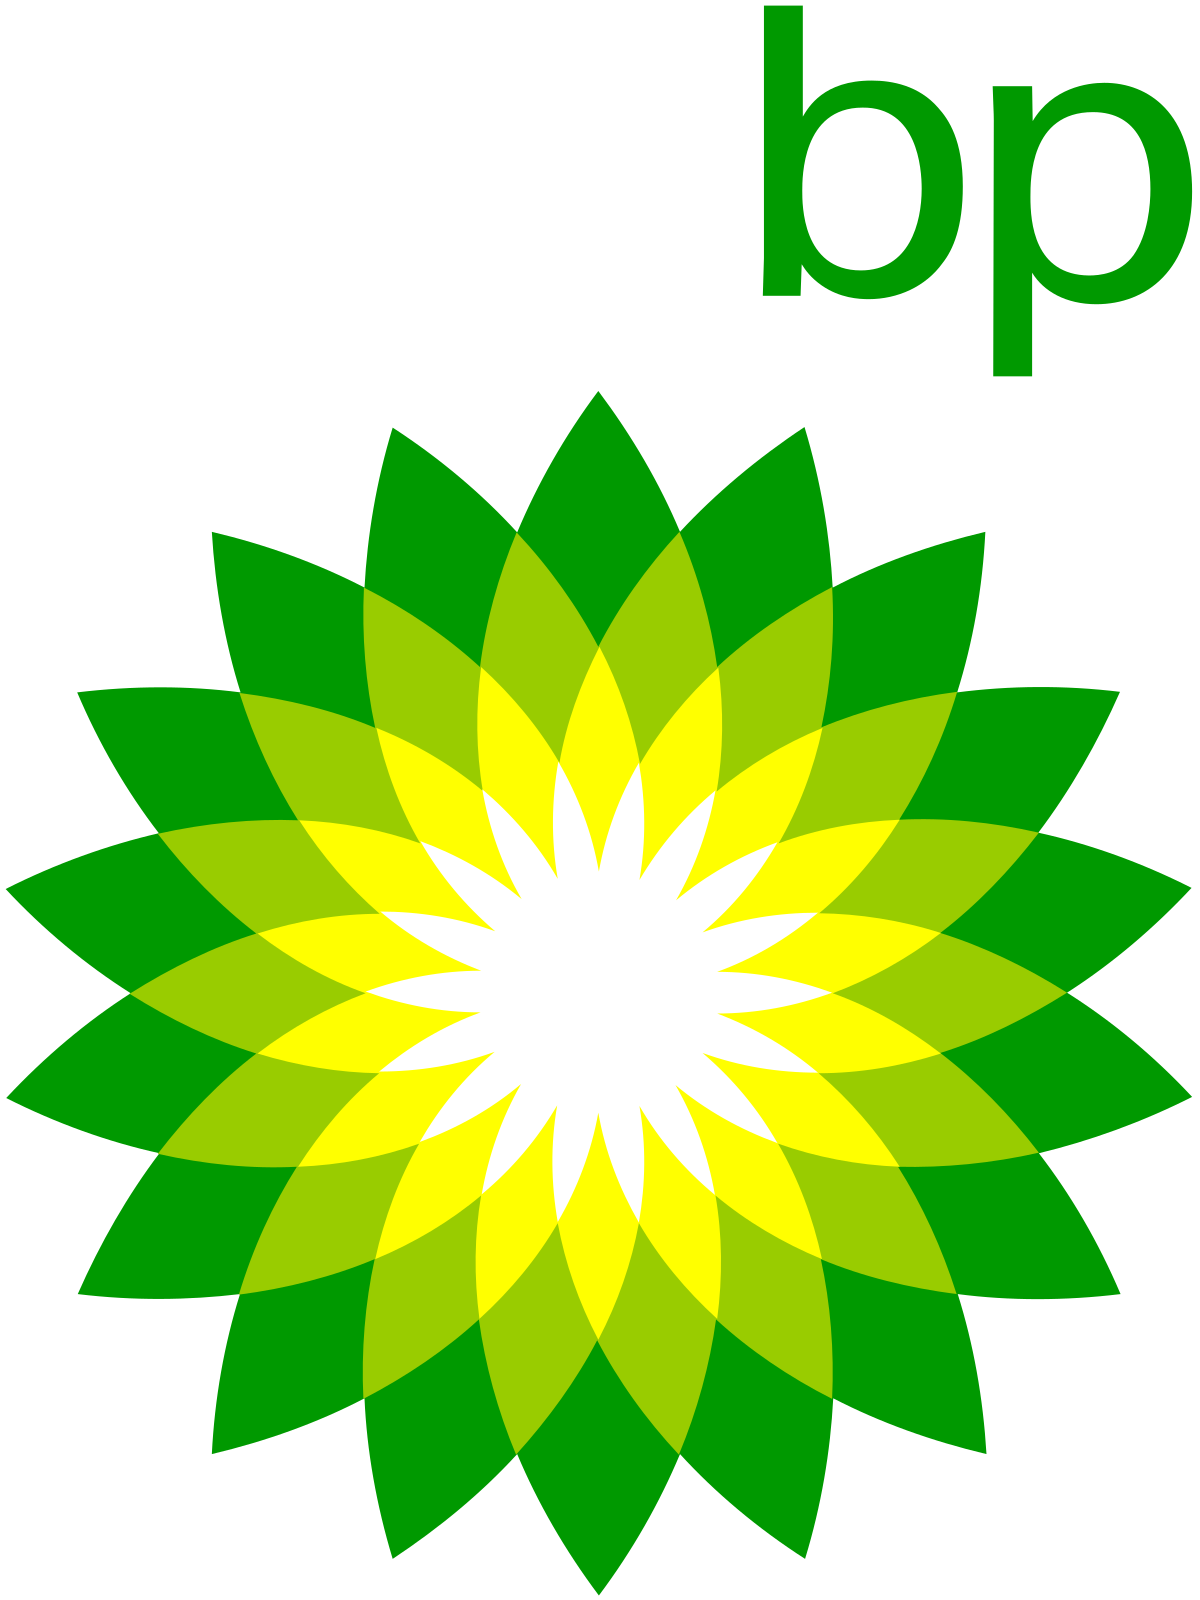 UK energy company BP's profits double to USD 27.7 billion